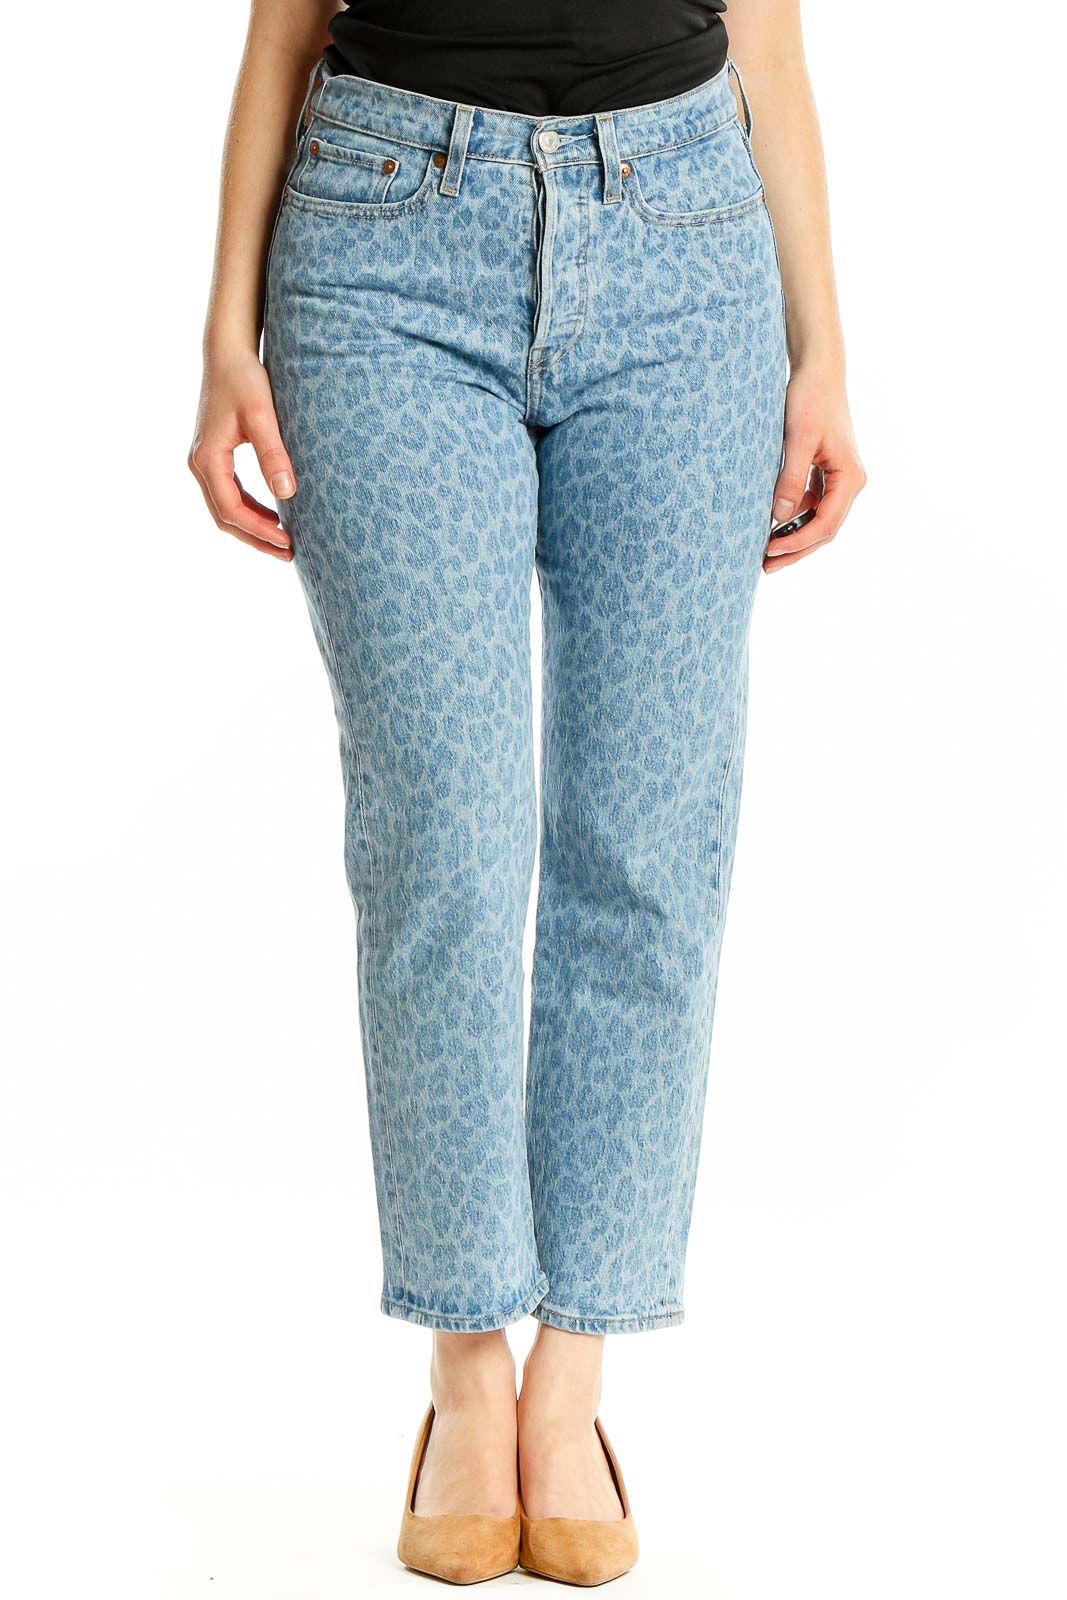 Blue Cheetah Print Jeans Front